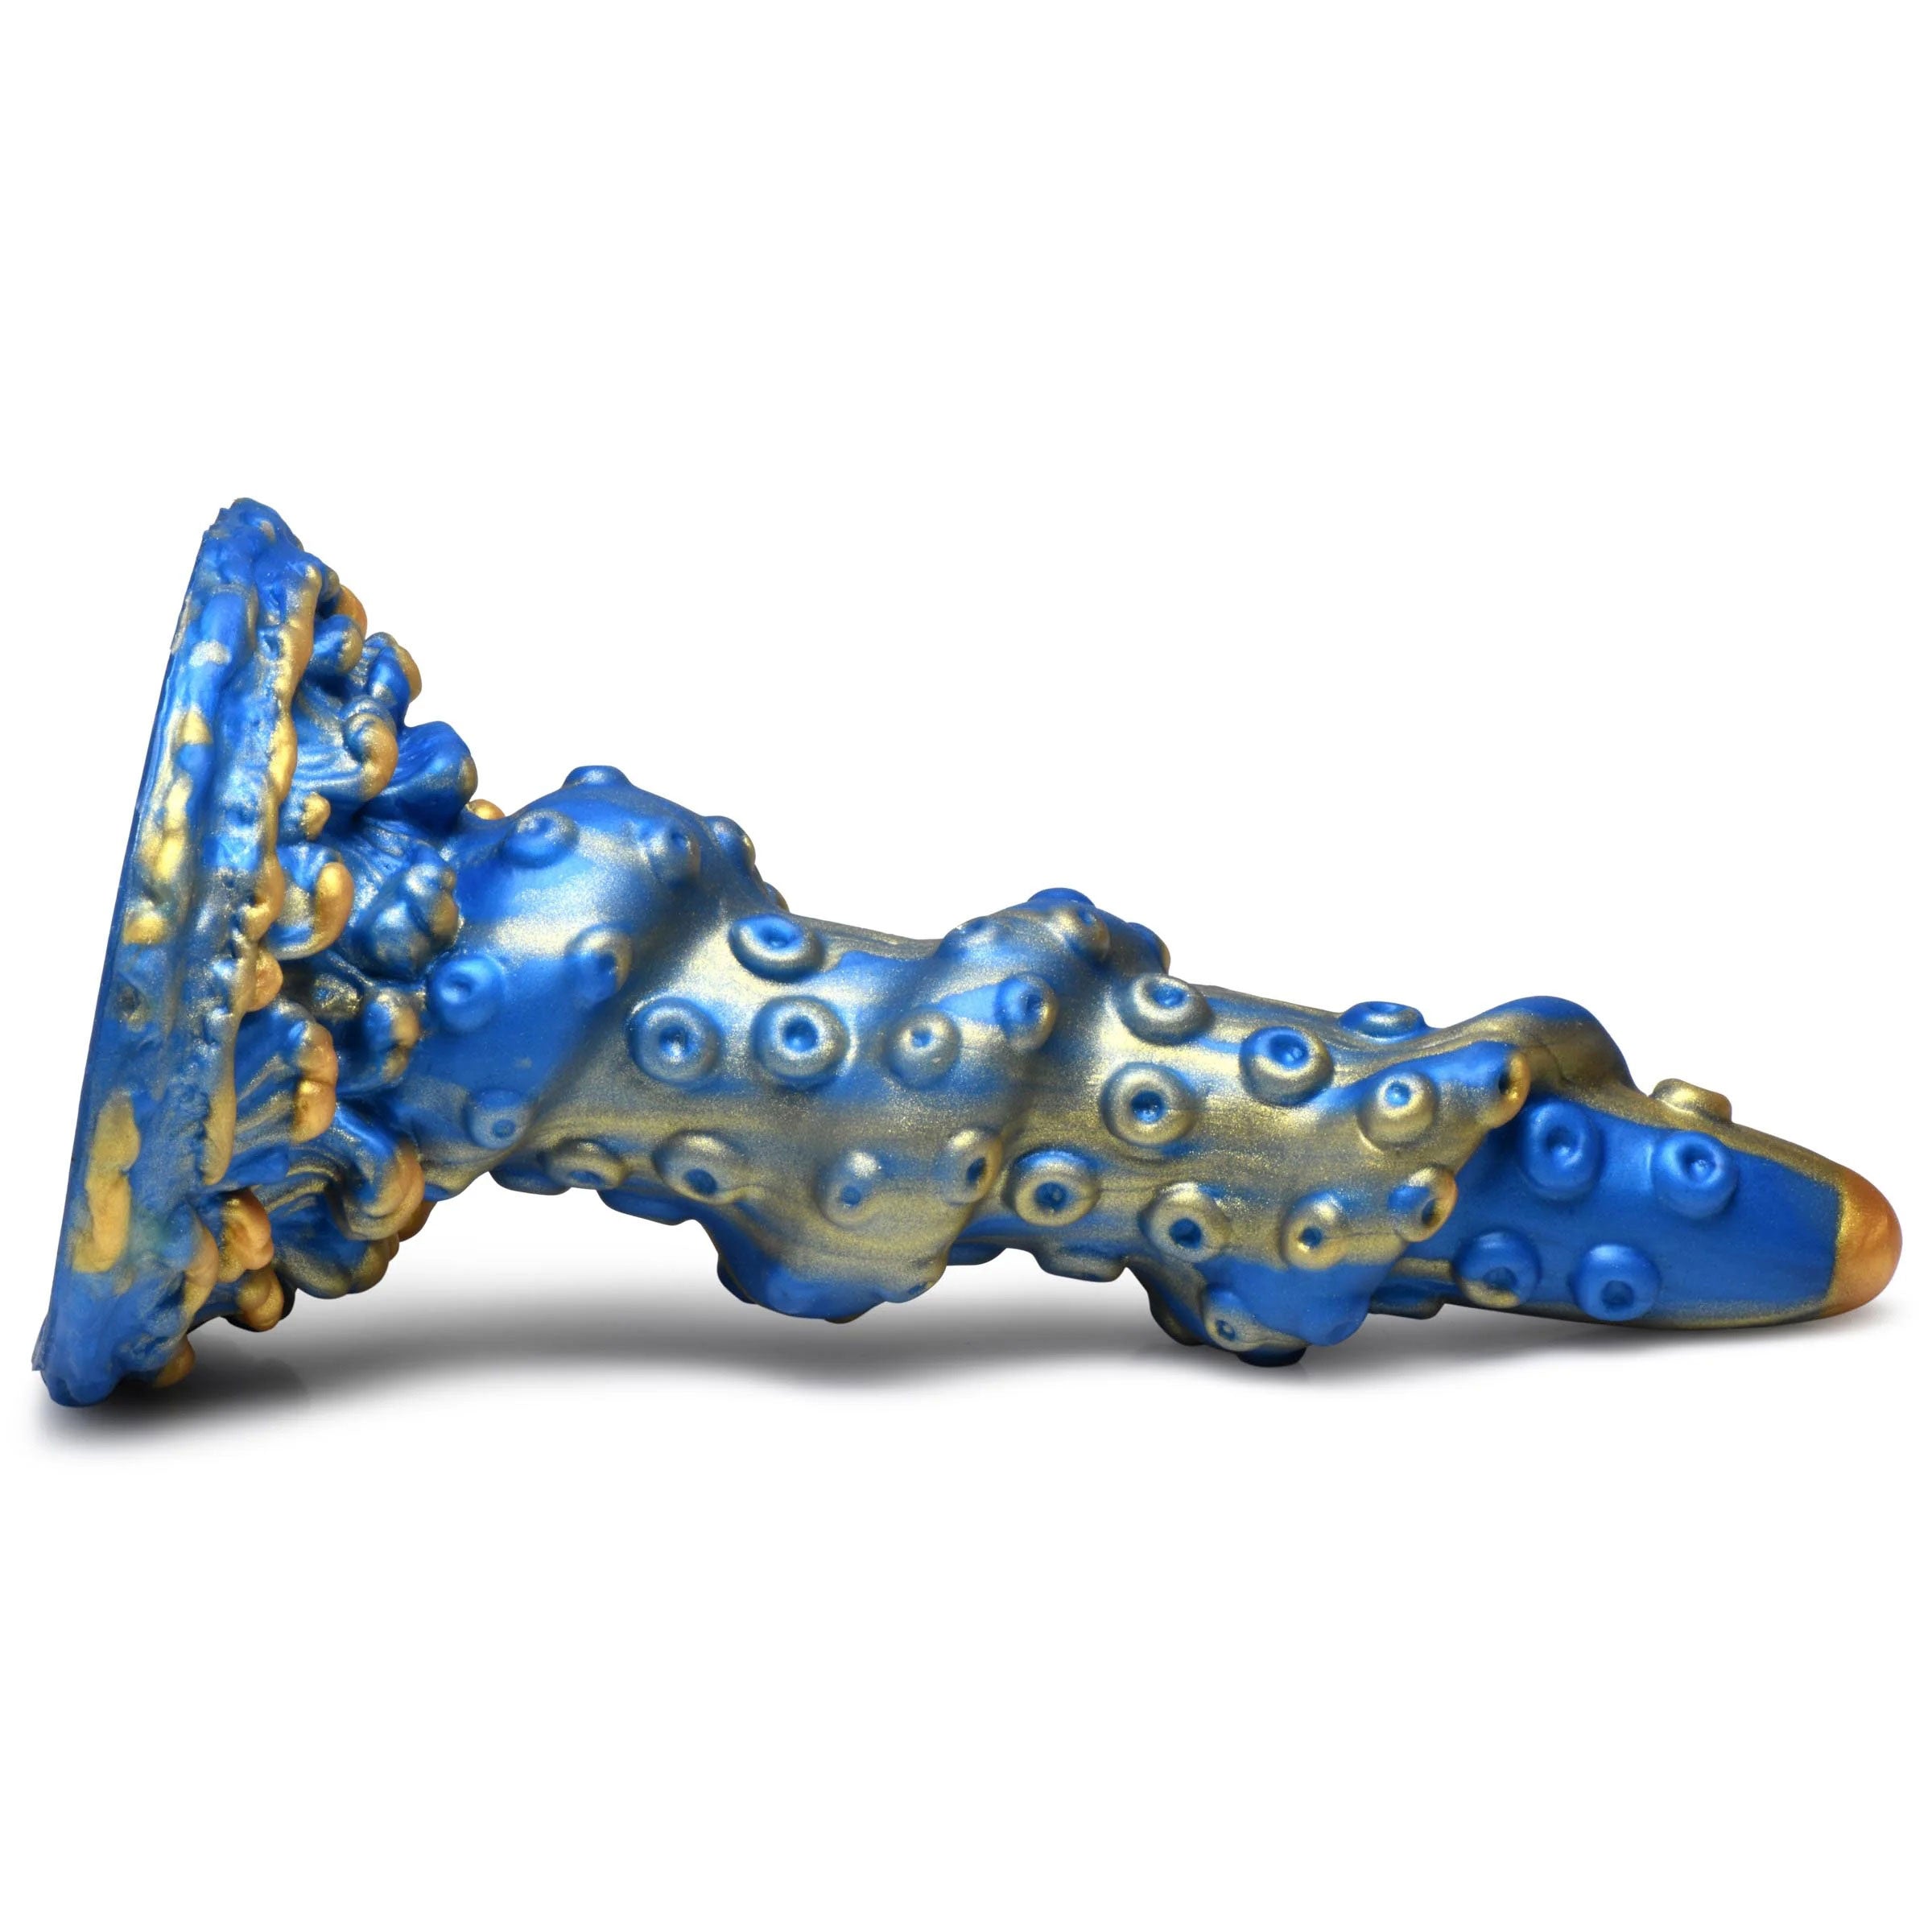 Dive into Deep-Sea Fantasy with the Kraken Silicone Dildo - A Unique & Safe Pleasure Toy!